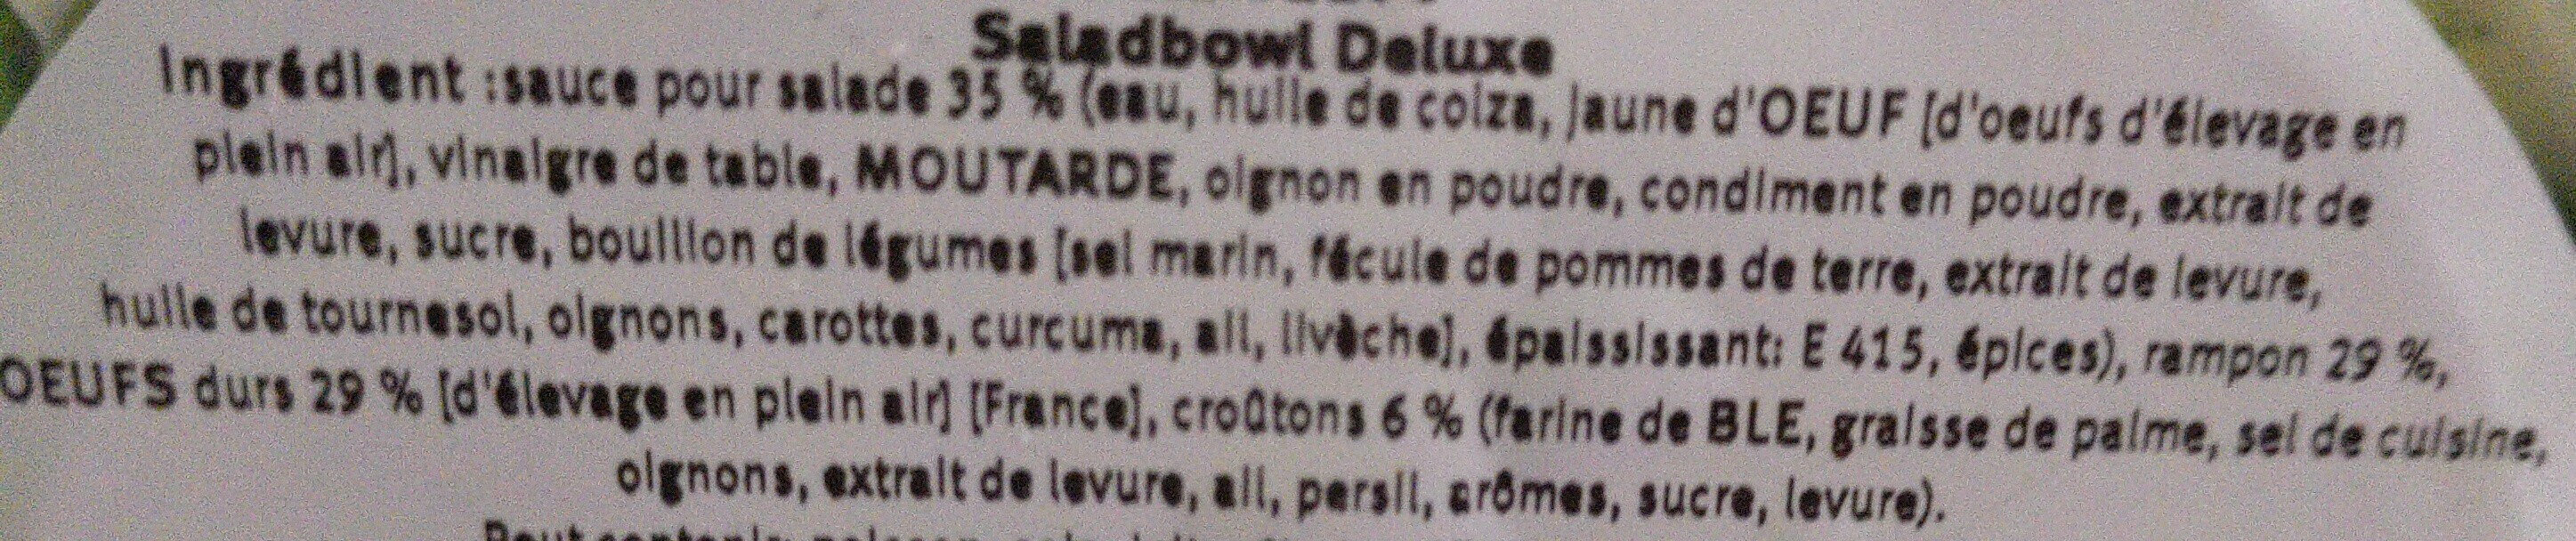 Saladbowl Deluxe - Ingredienti - fr